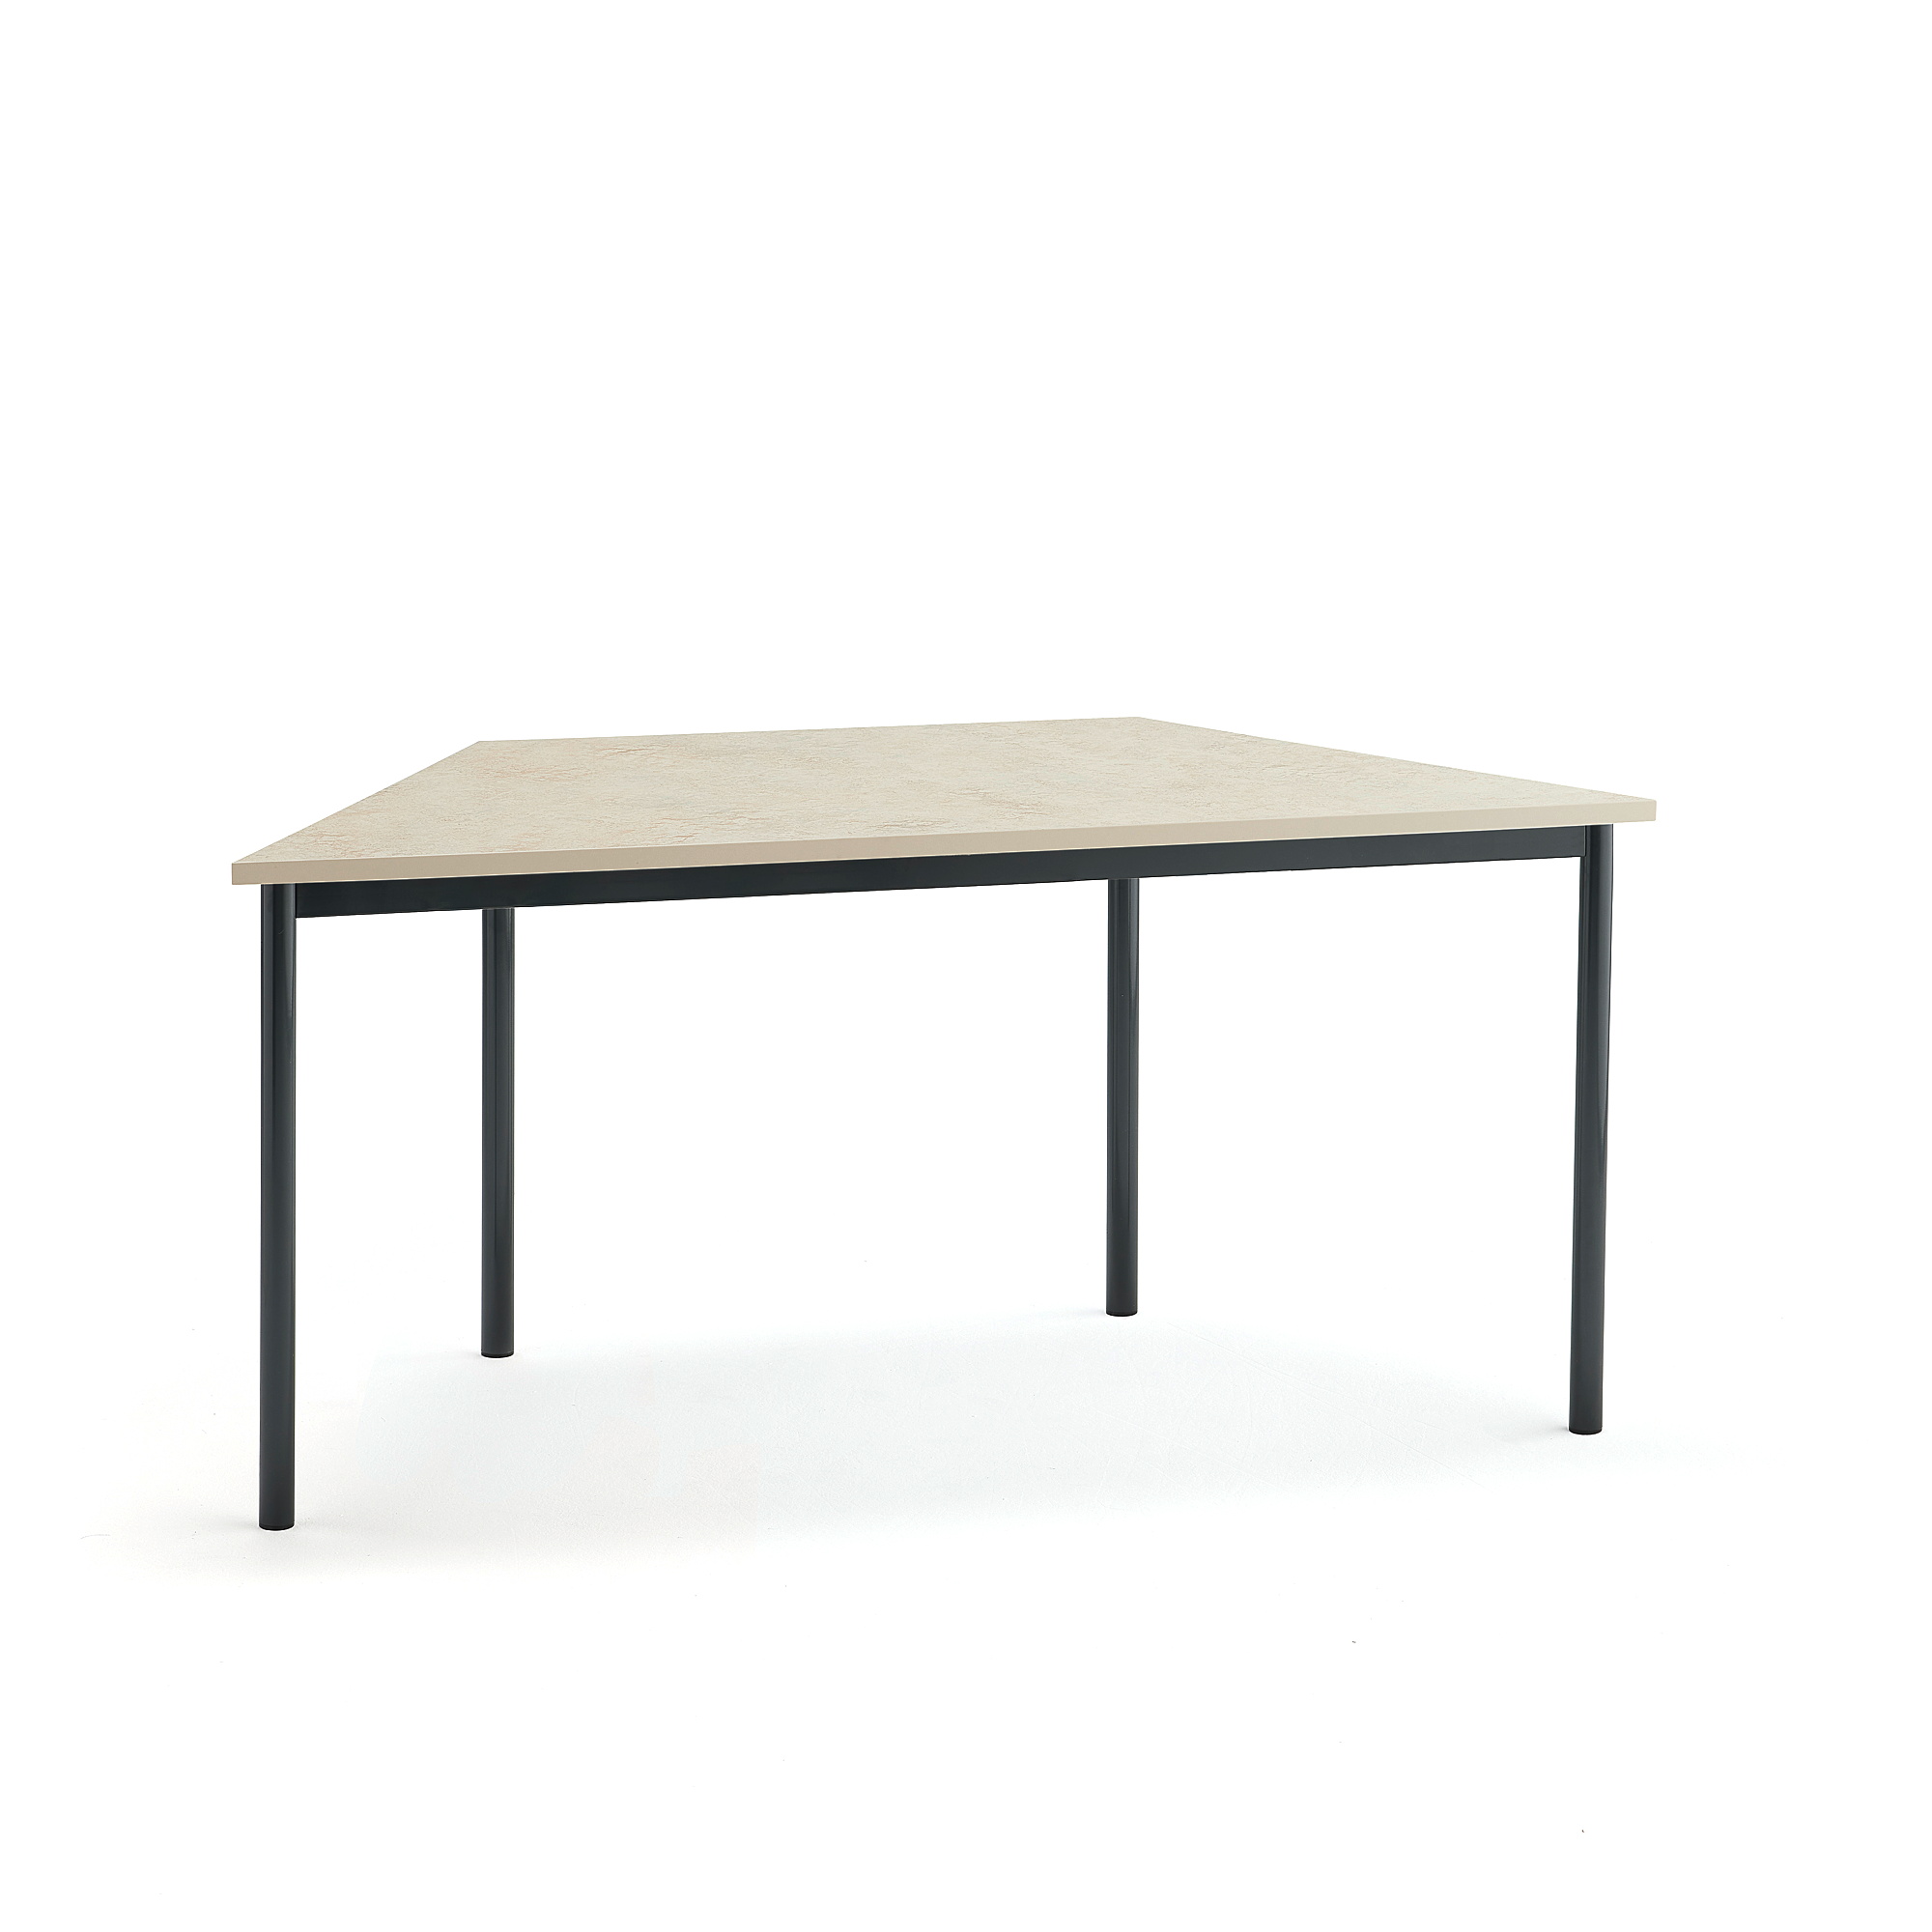 Stůl SONITUS TRAPETS, 1600x800x720 mm, antracitově šedé nohy, deska s linoleem, béžová